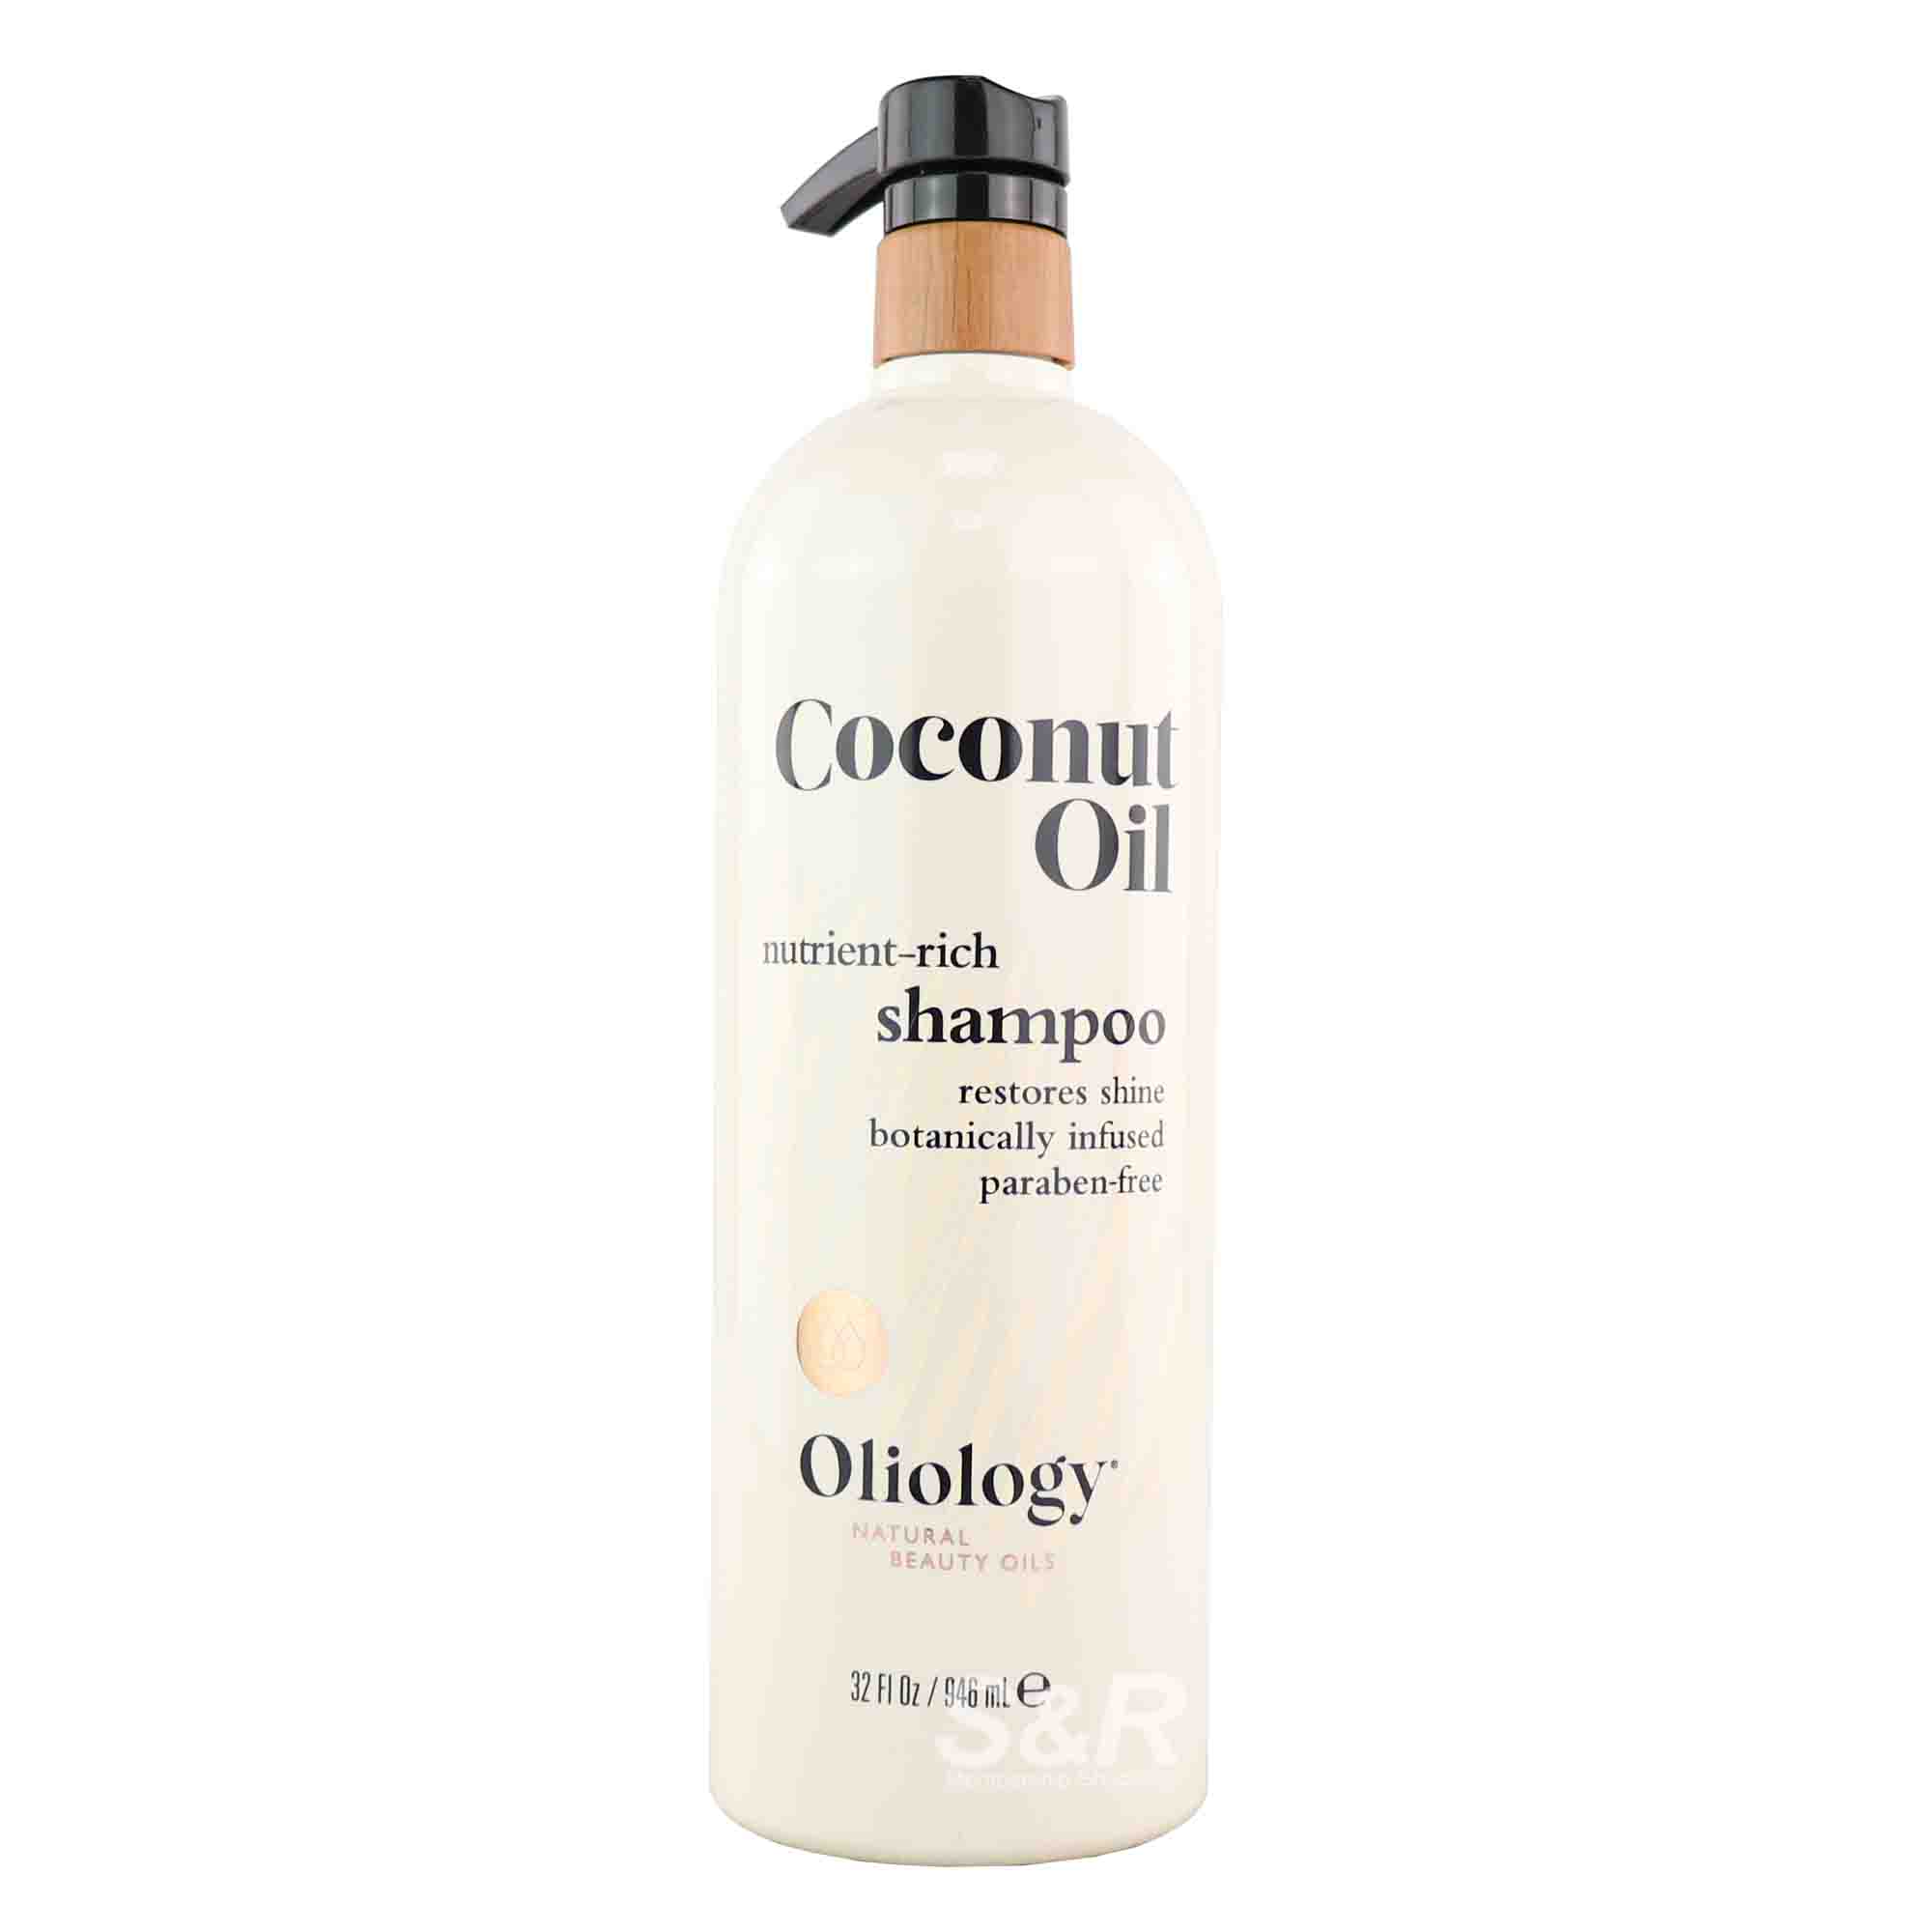 Oliology Coconut Oil Nutrient-Rich Shampoo 946mL